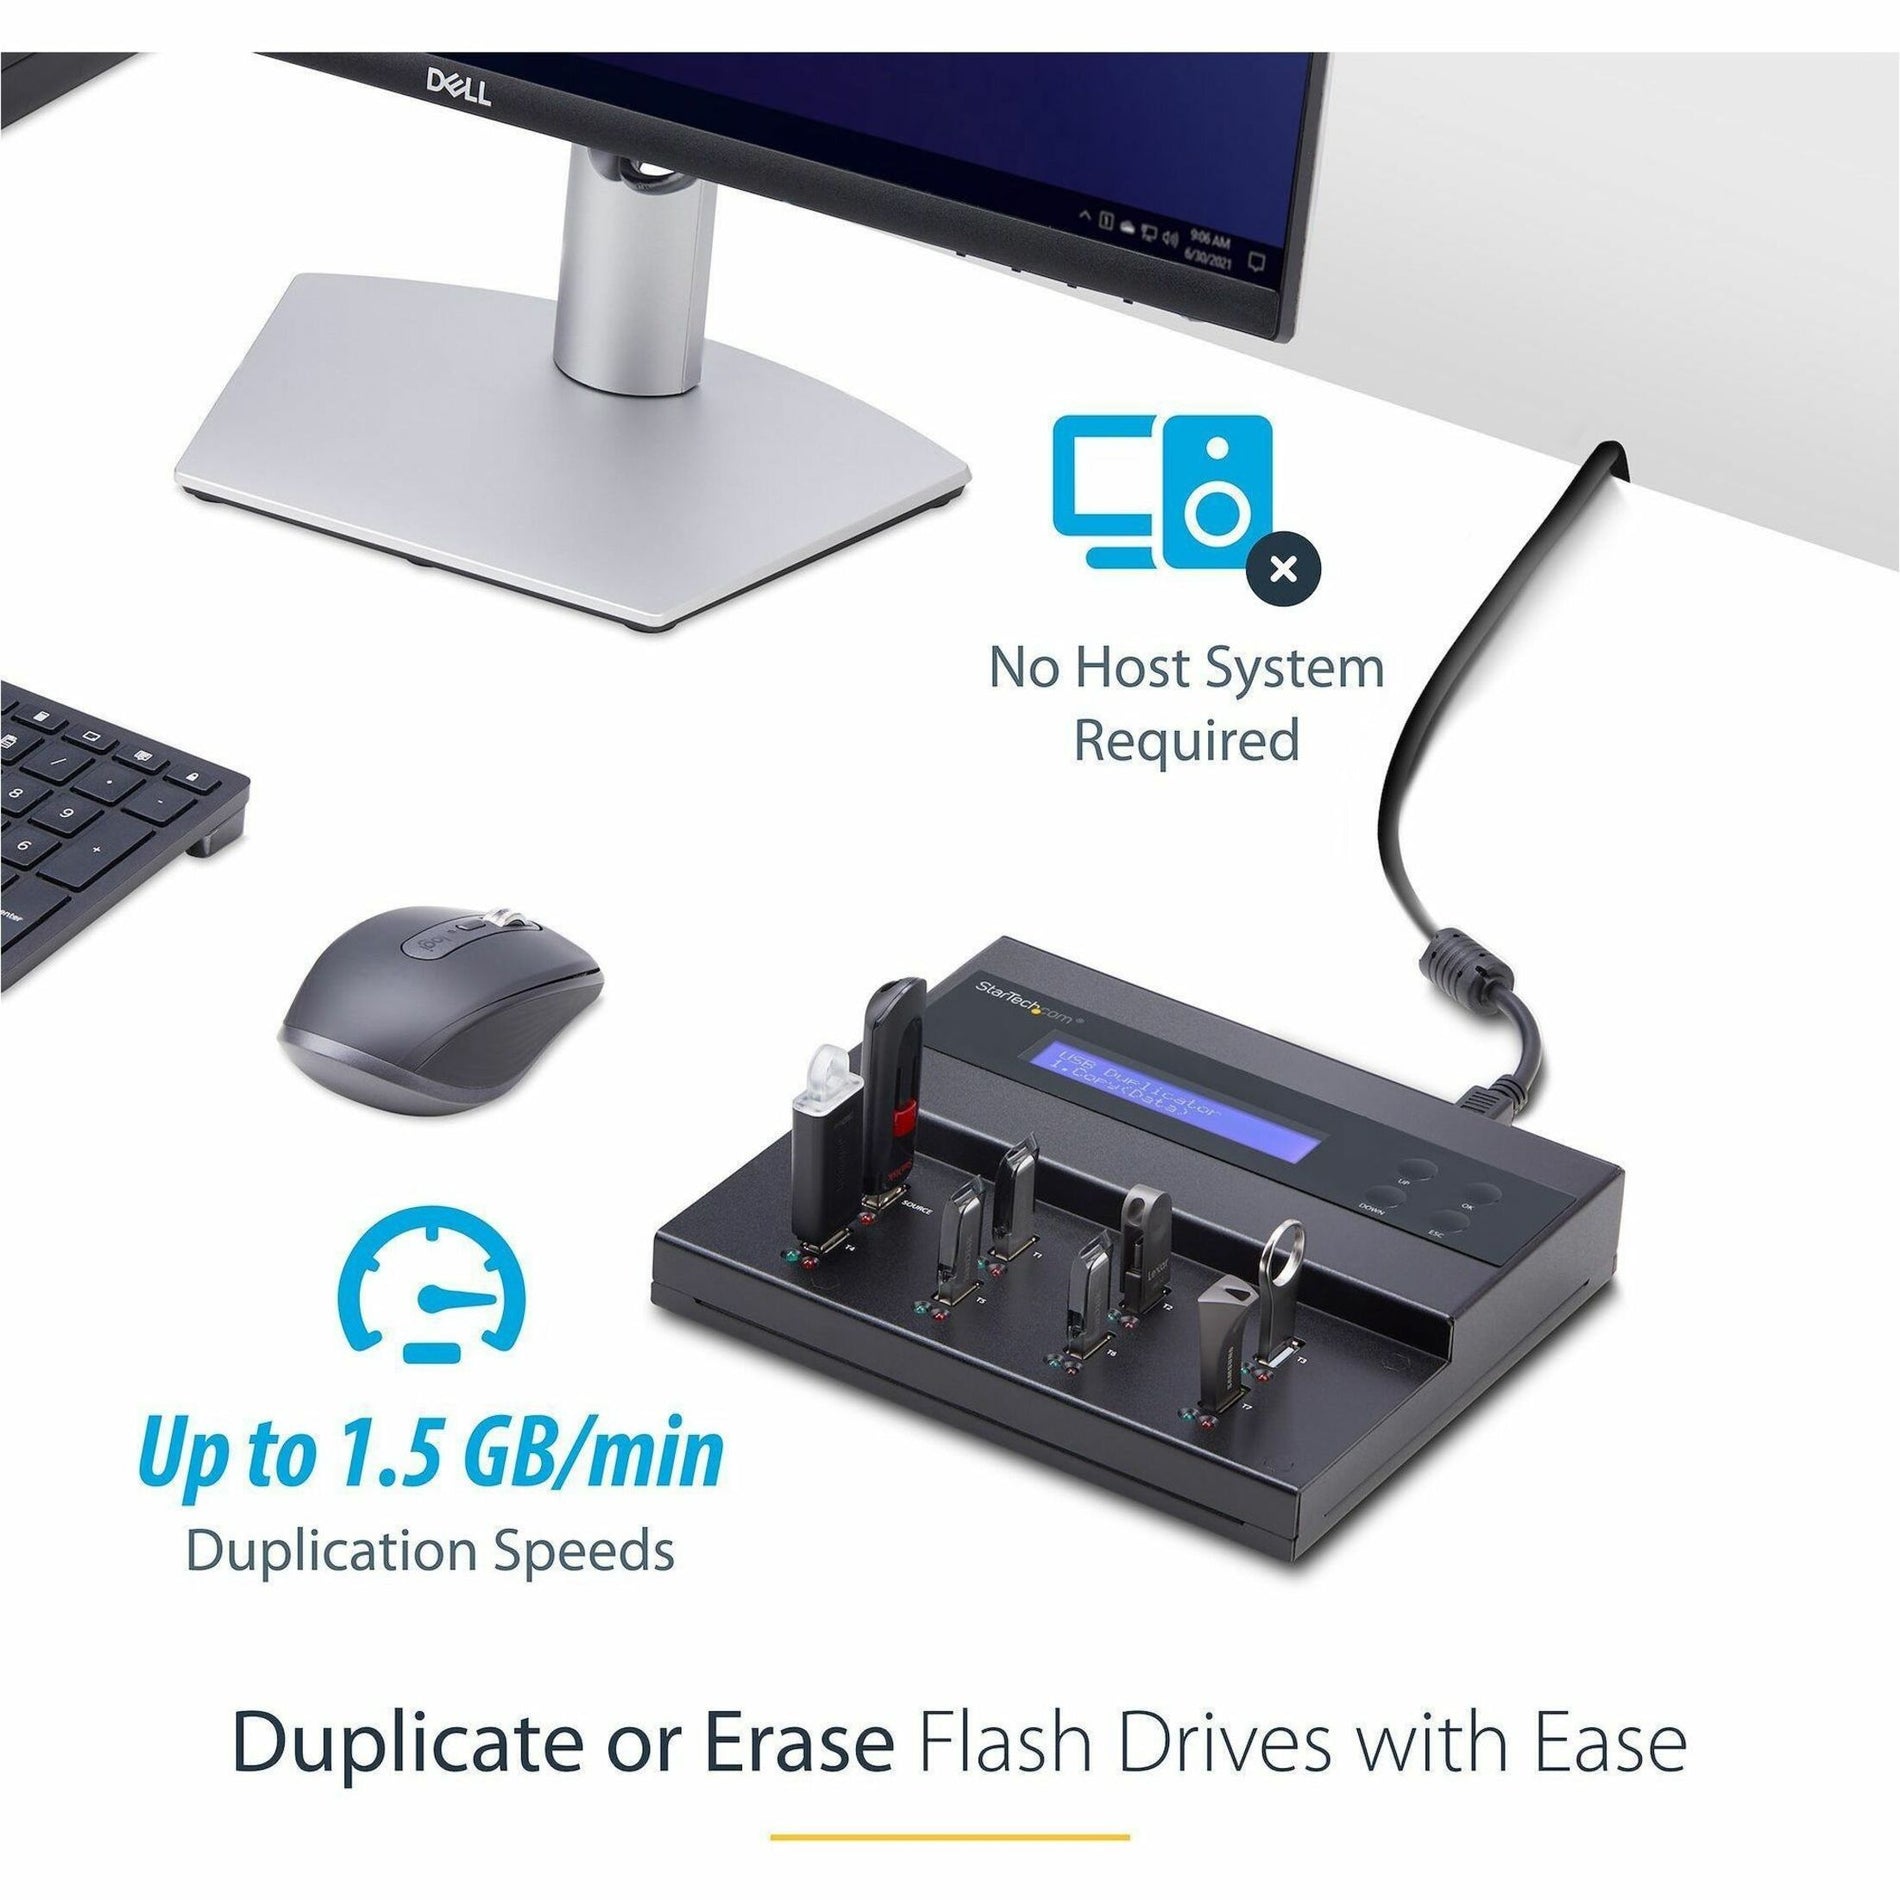 StarTech.com USBDUPE17 1:7 Standalone USB Duplicator and Eraser - Flash Drive Duplicator, USB Copier, USB Thumb Drive Duplicator